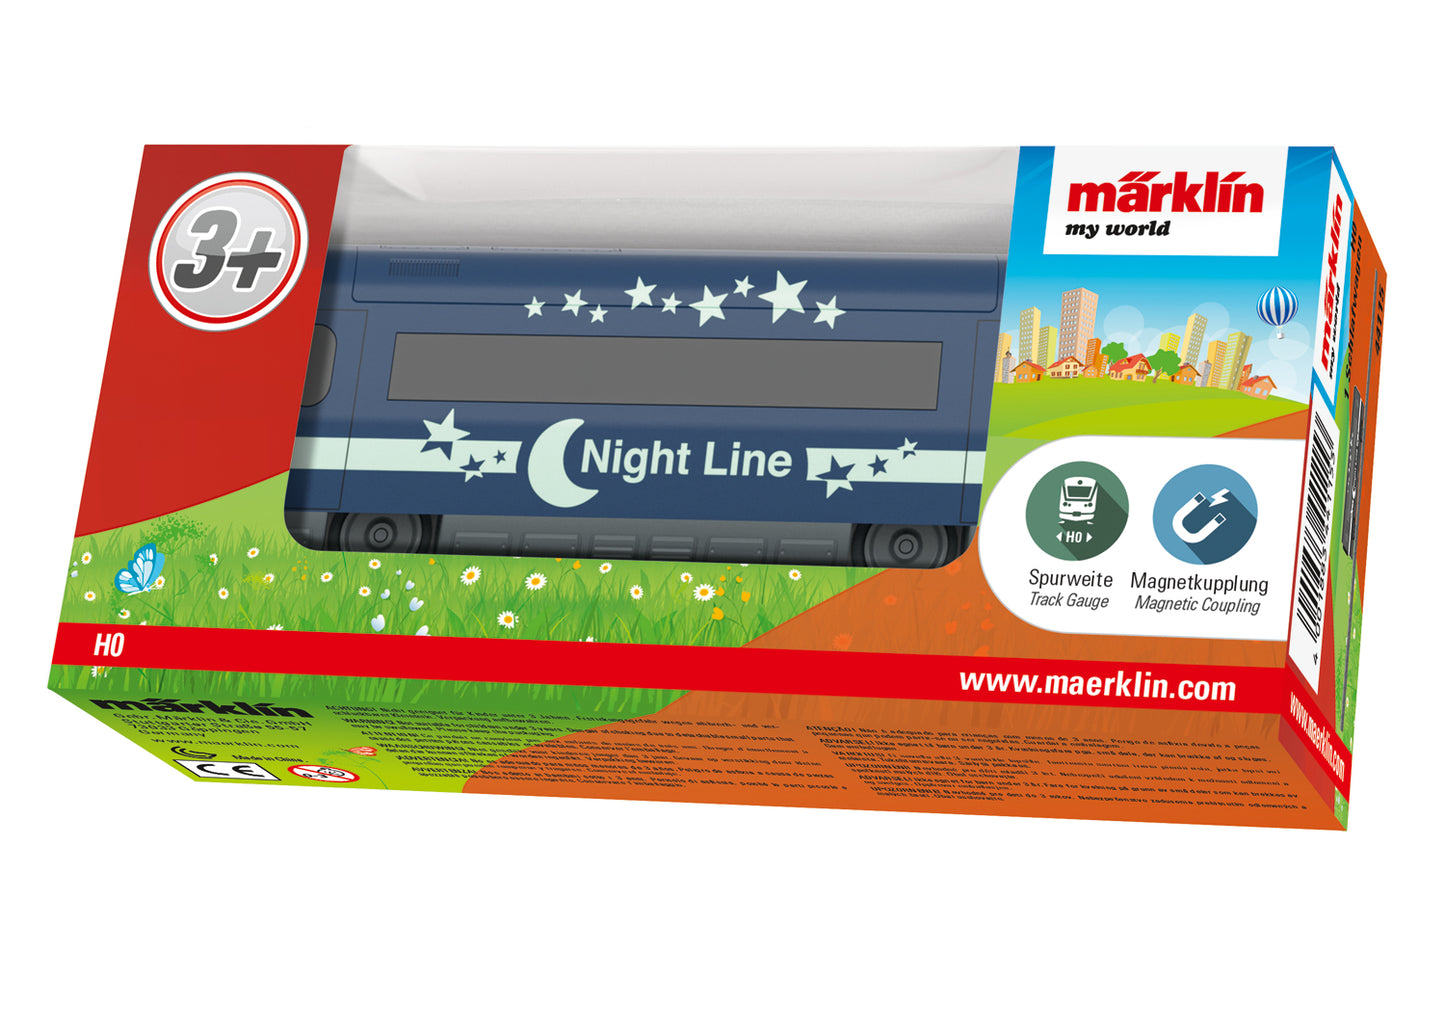 Marklin 44115 - Marklin my world "Night Line" Sleeping Car